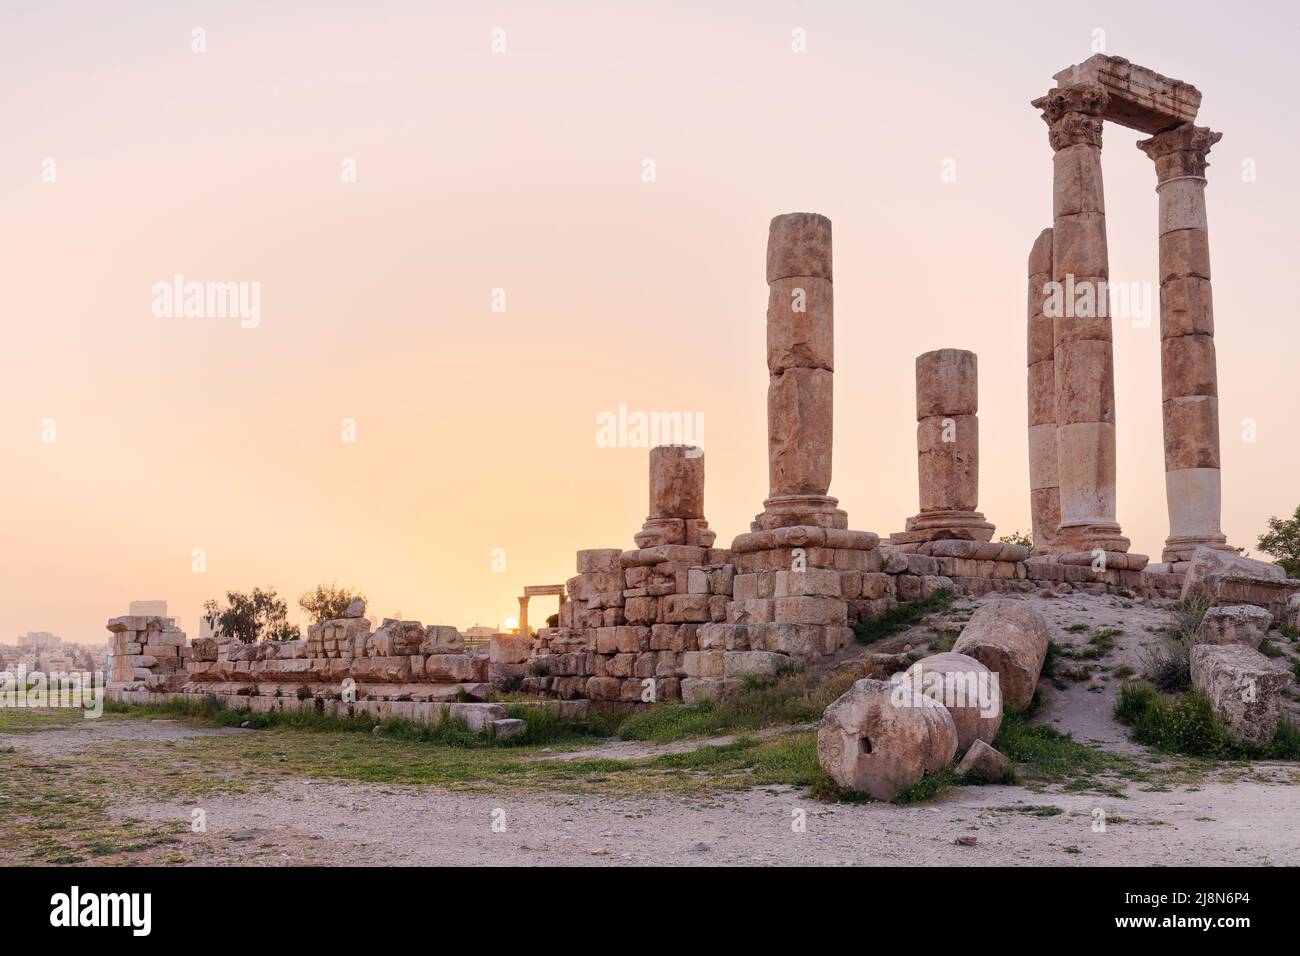 Amman, Jordan. Temple of Hercules, the Amman fortress ruins, Jabal al-Qal'a sunset colored light. Stock Photo